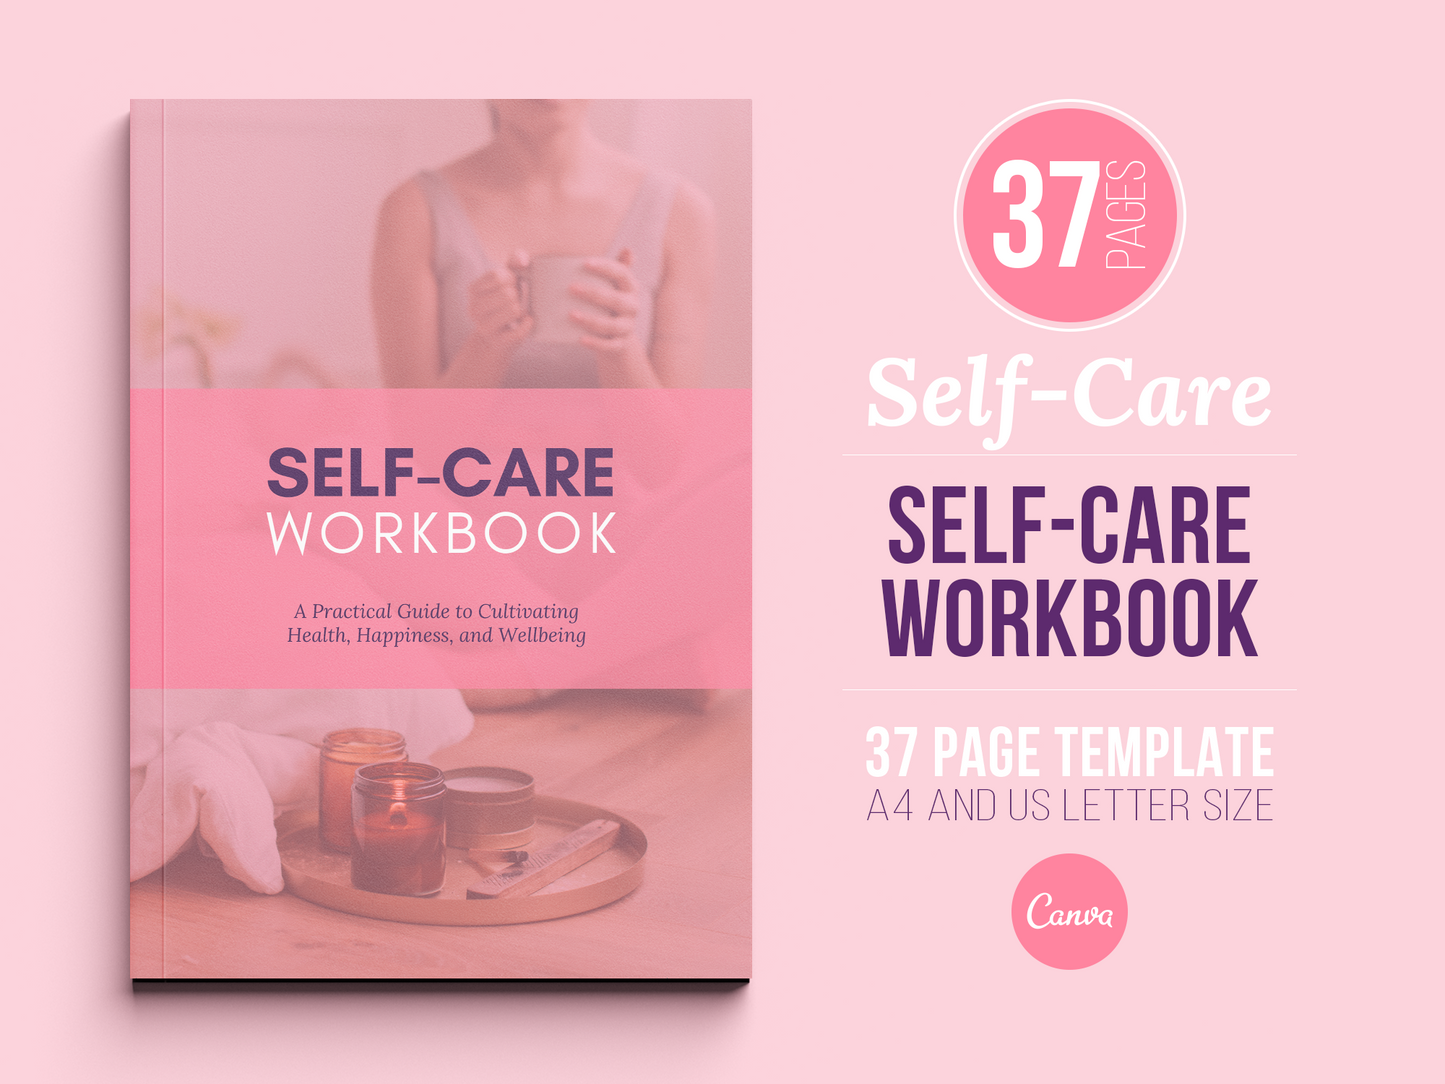 Self-Care Workbook (Punch)